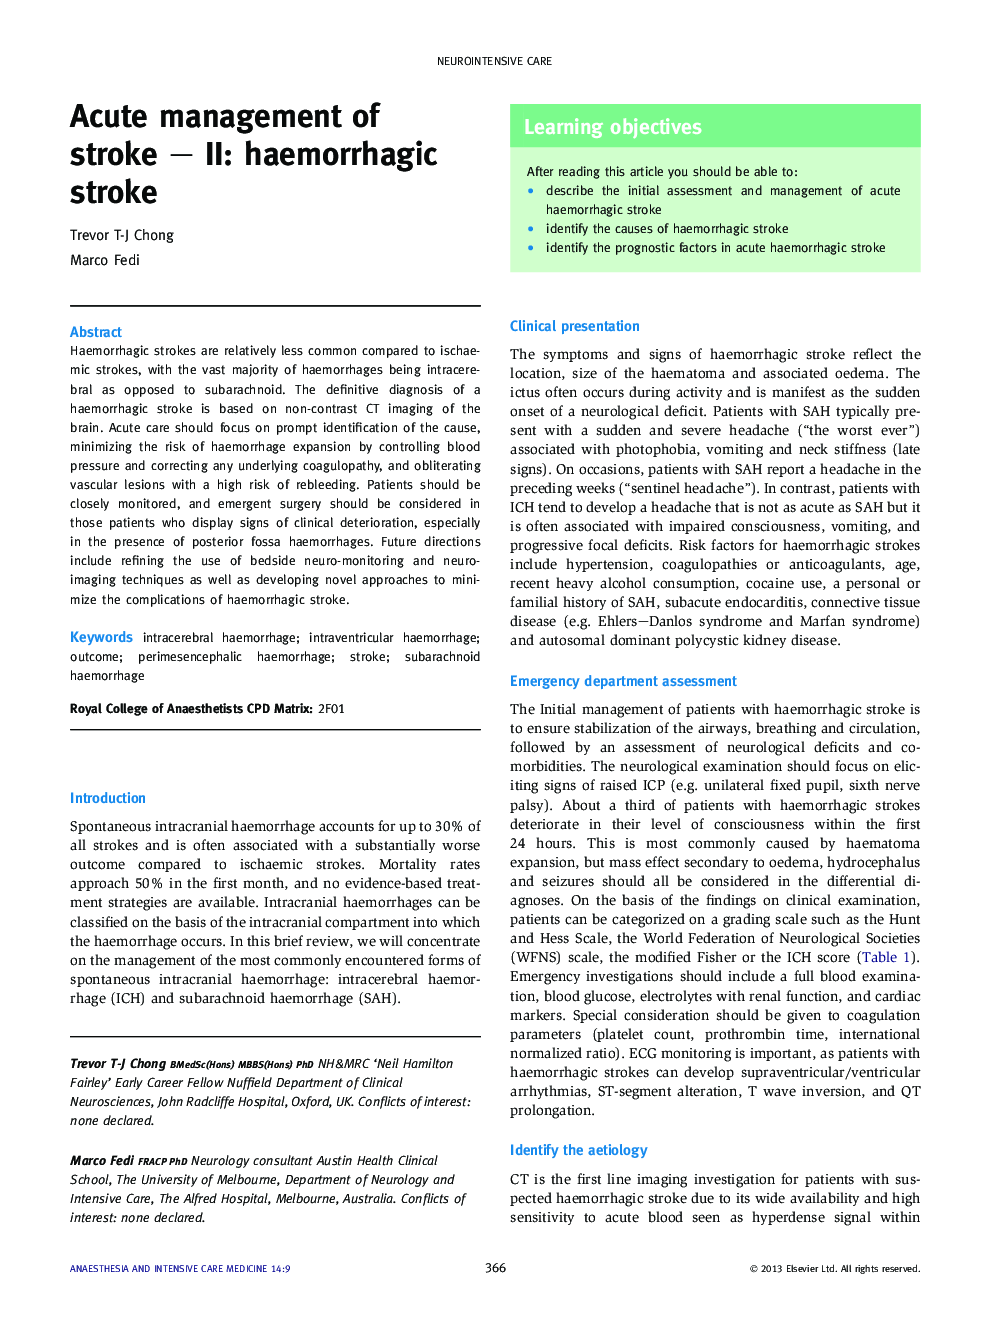 Acute management of stroke – II: haemorrhagic stroke